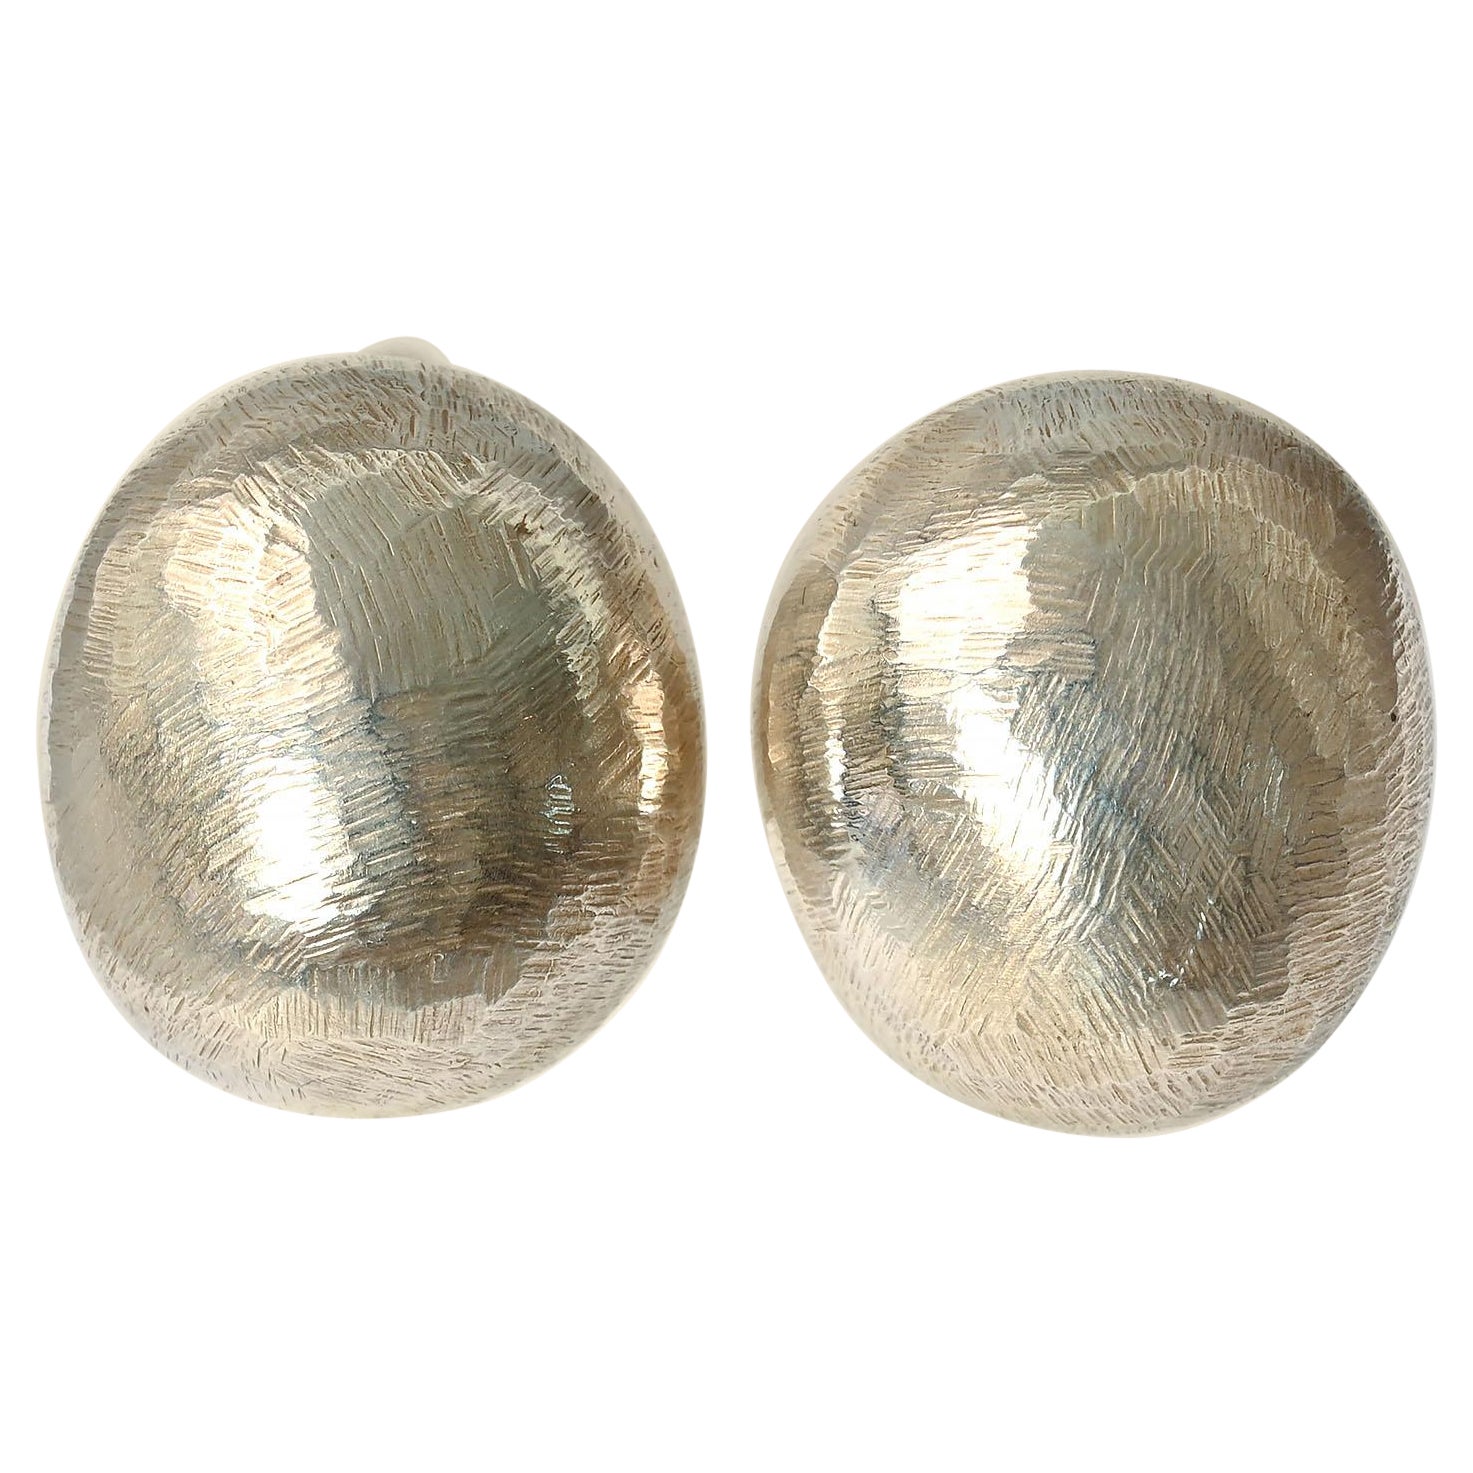 John Iversen Large Earrings from Pebble Series